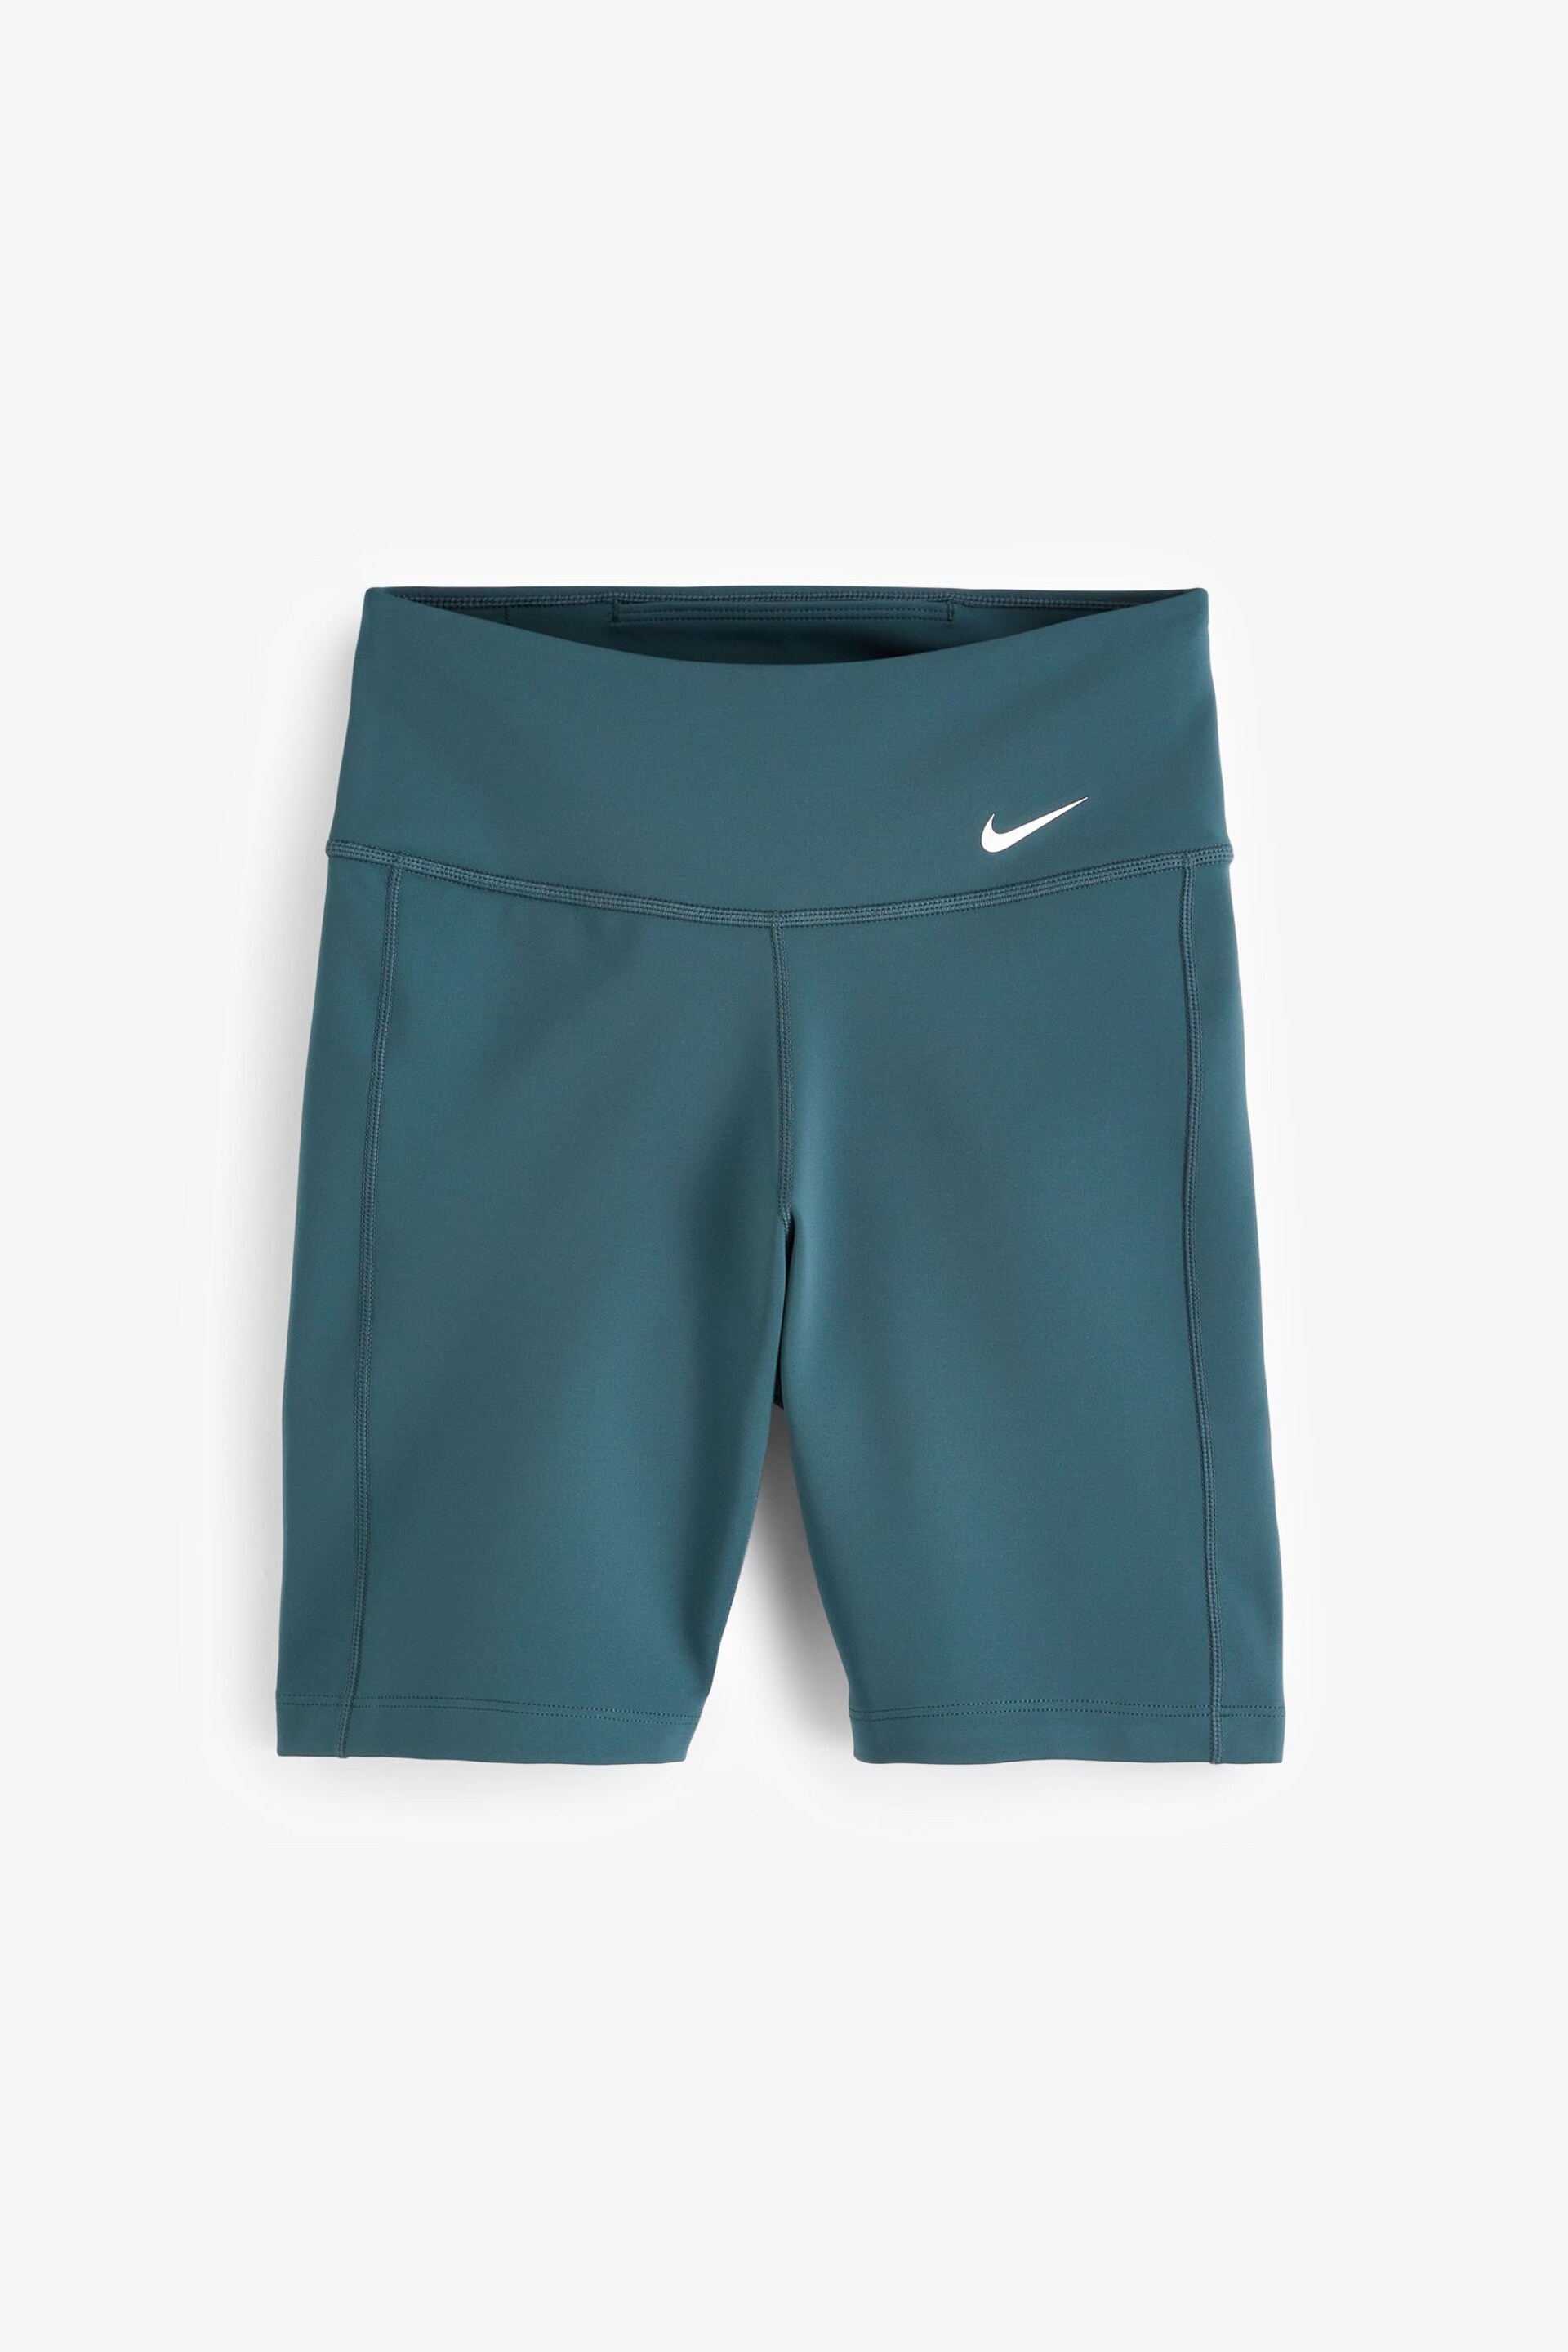 Nike Green Leak Protection Mid Rise 7 Biker Shorts - Image 8 of 8